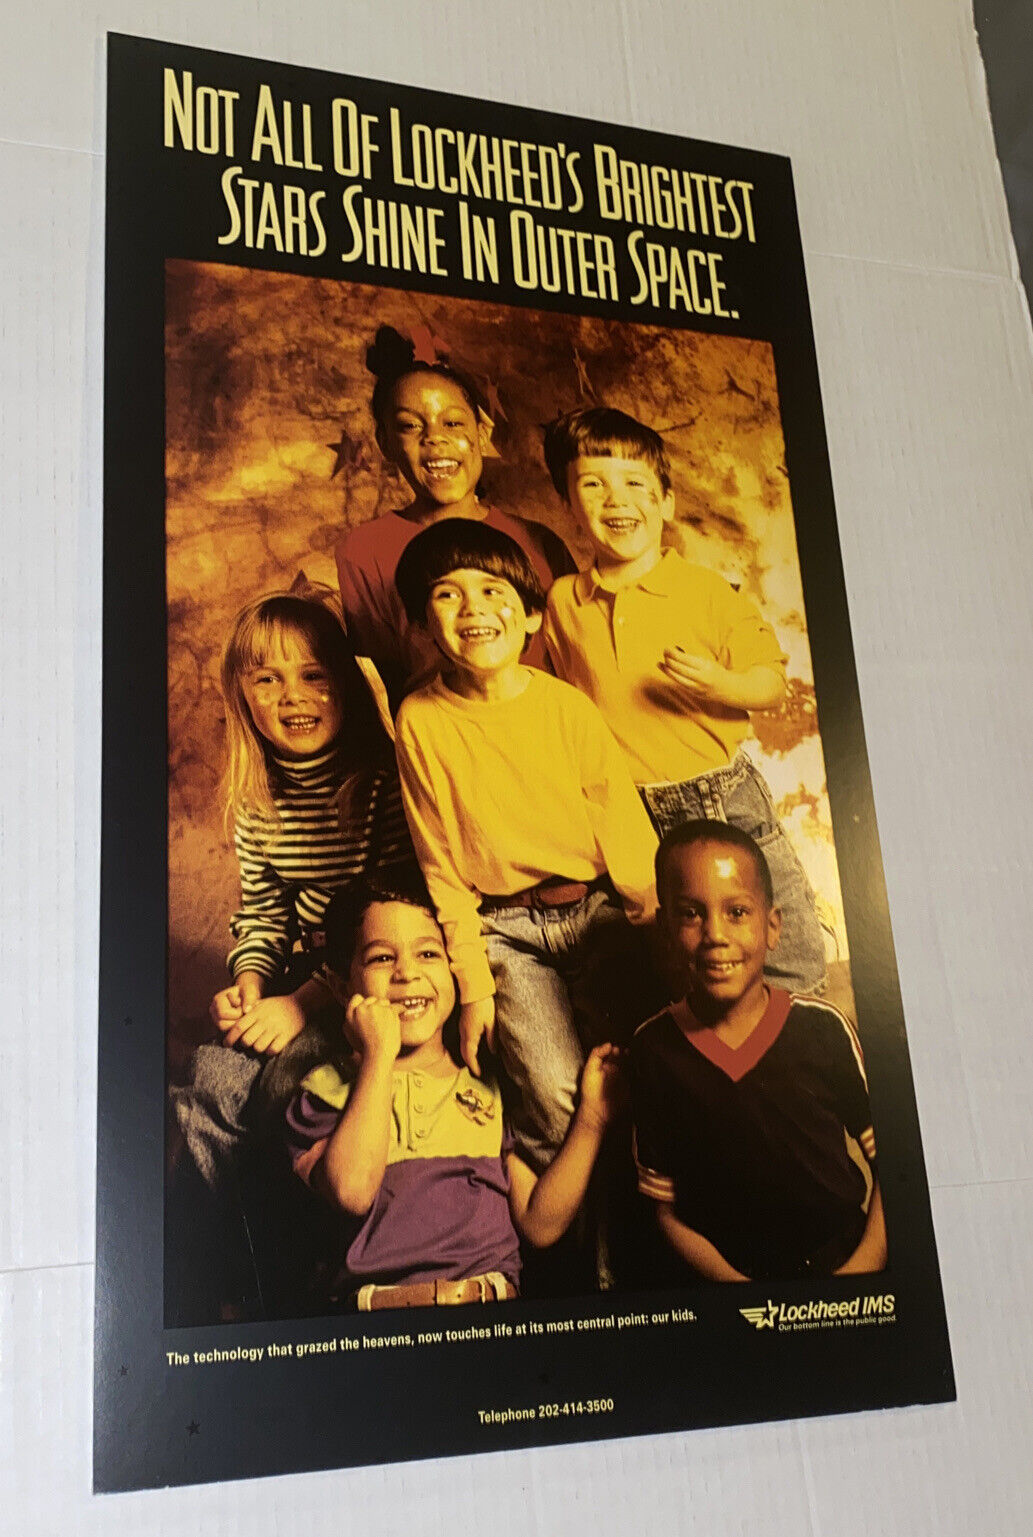 VTG Lockheed Martin IMS Promo Poster 24x13 foamboard Not All Stars Shine Space